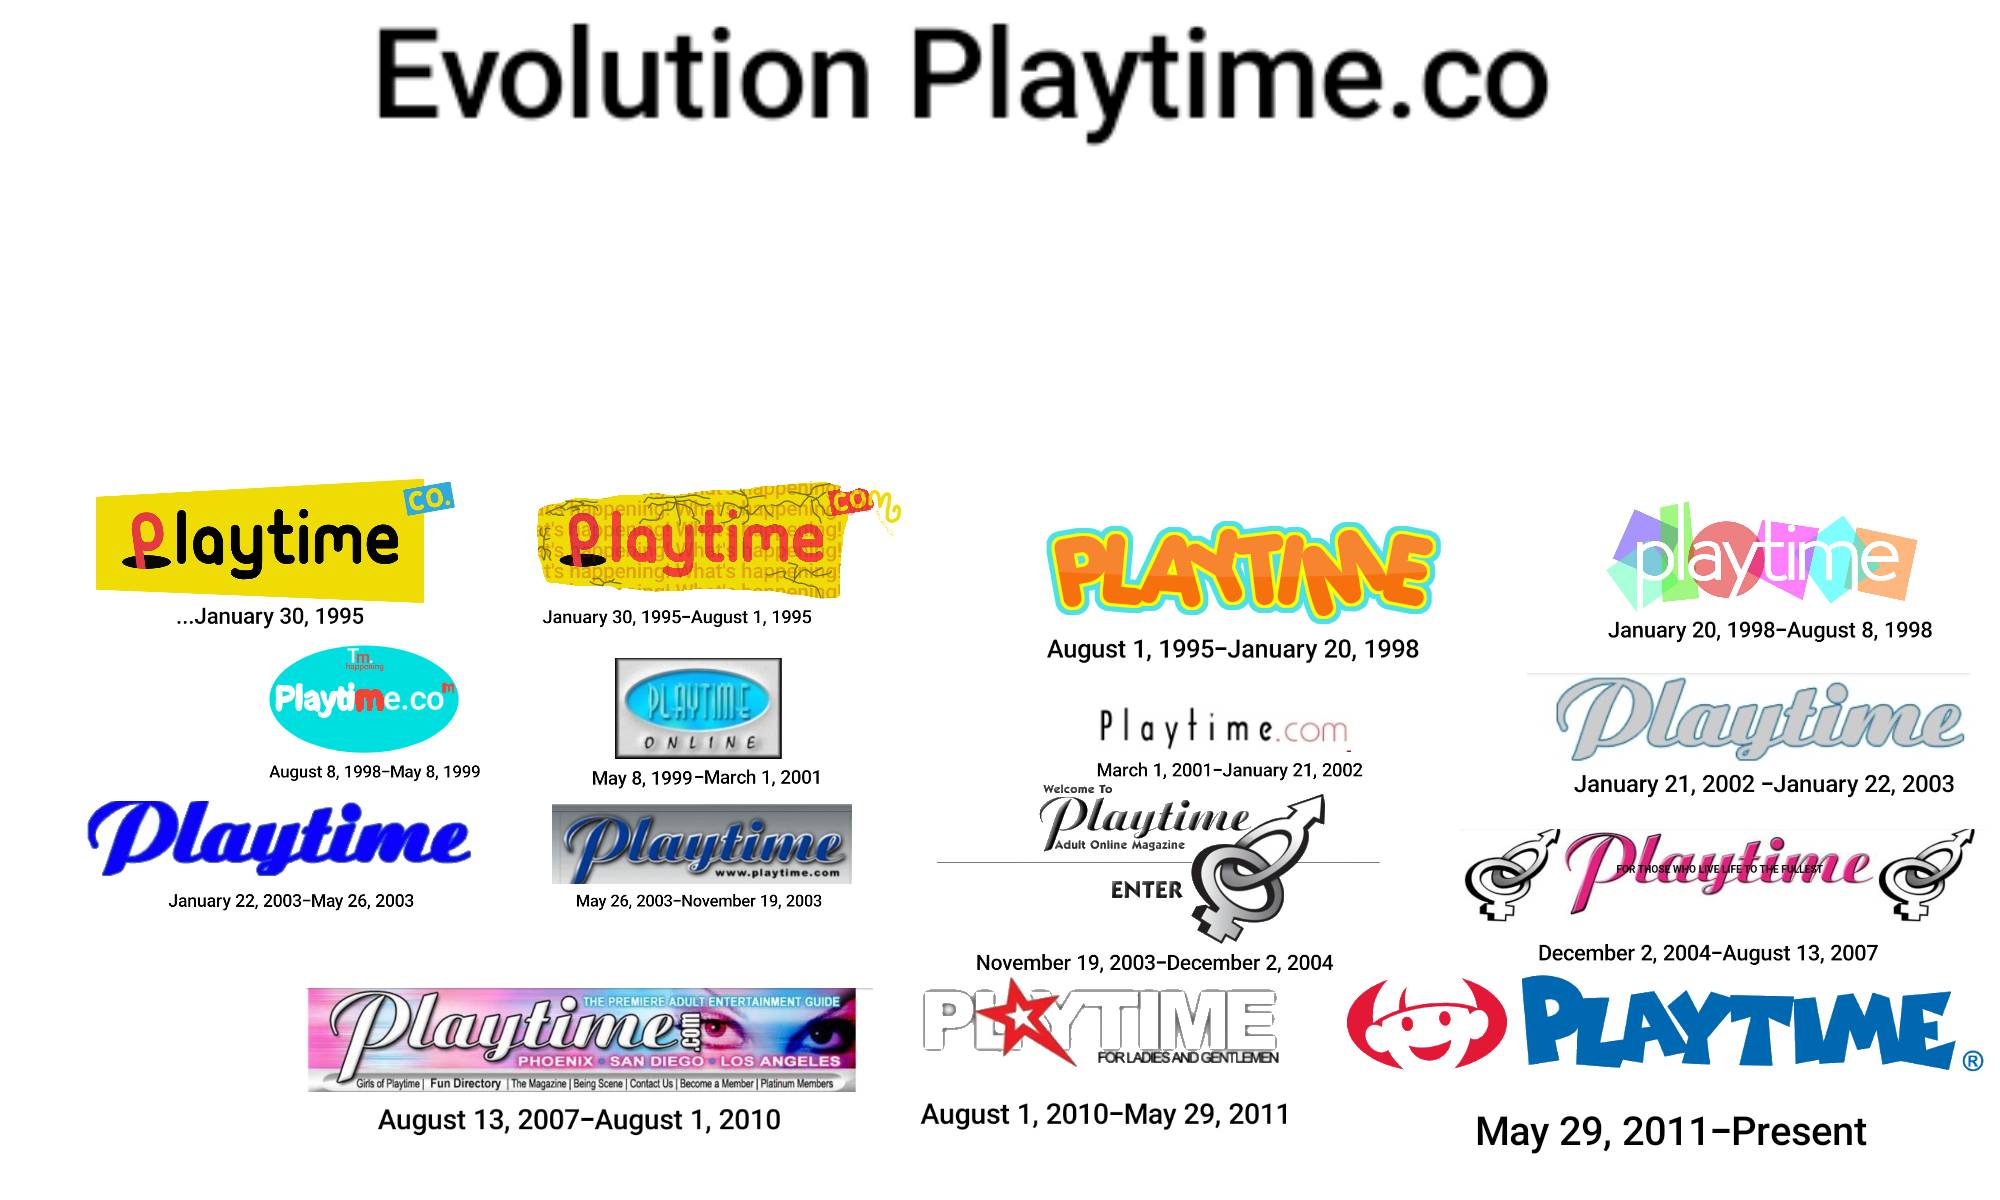 Evolution Playtime.co by RehaanRashid on DeviantArt